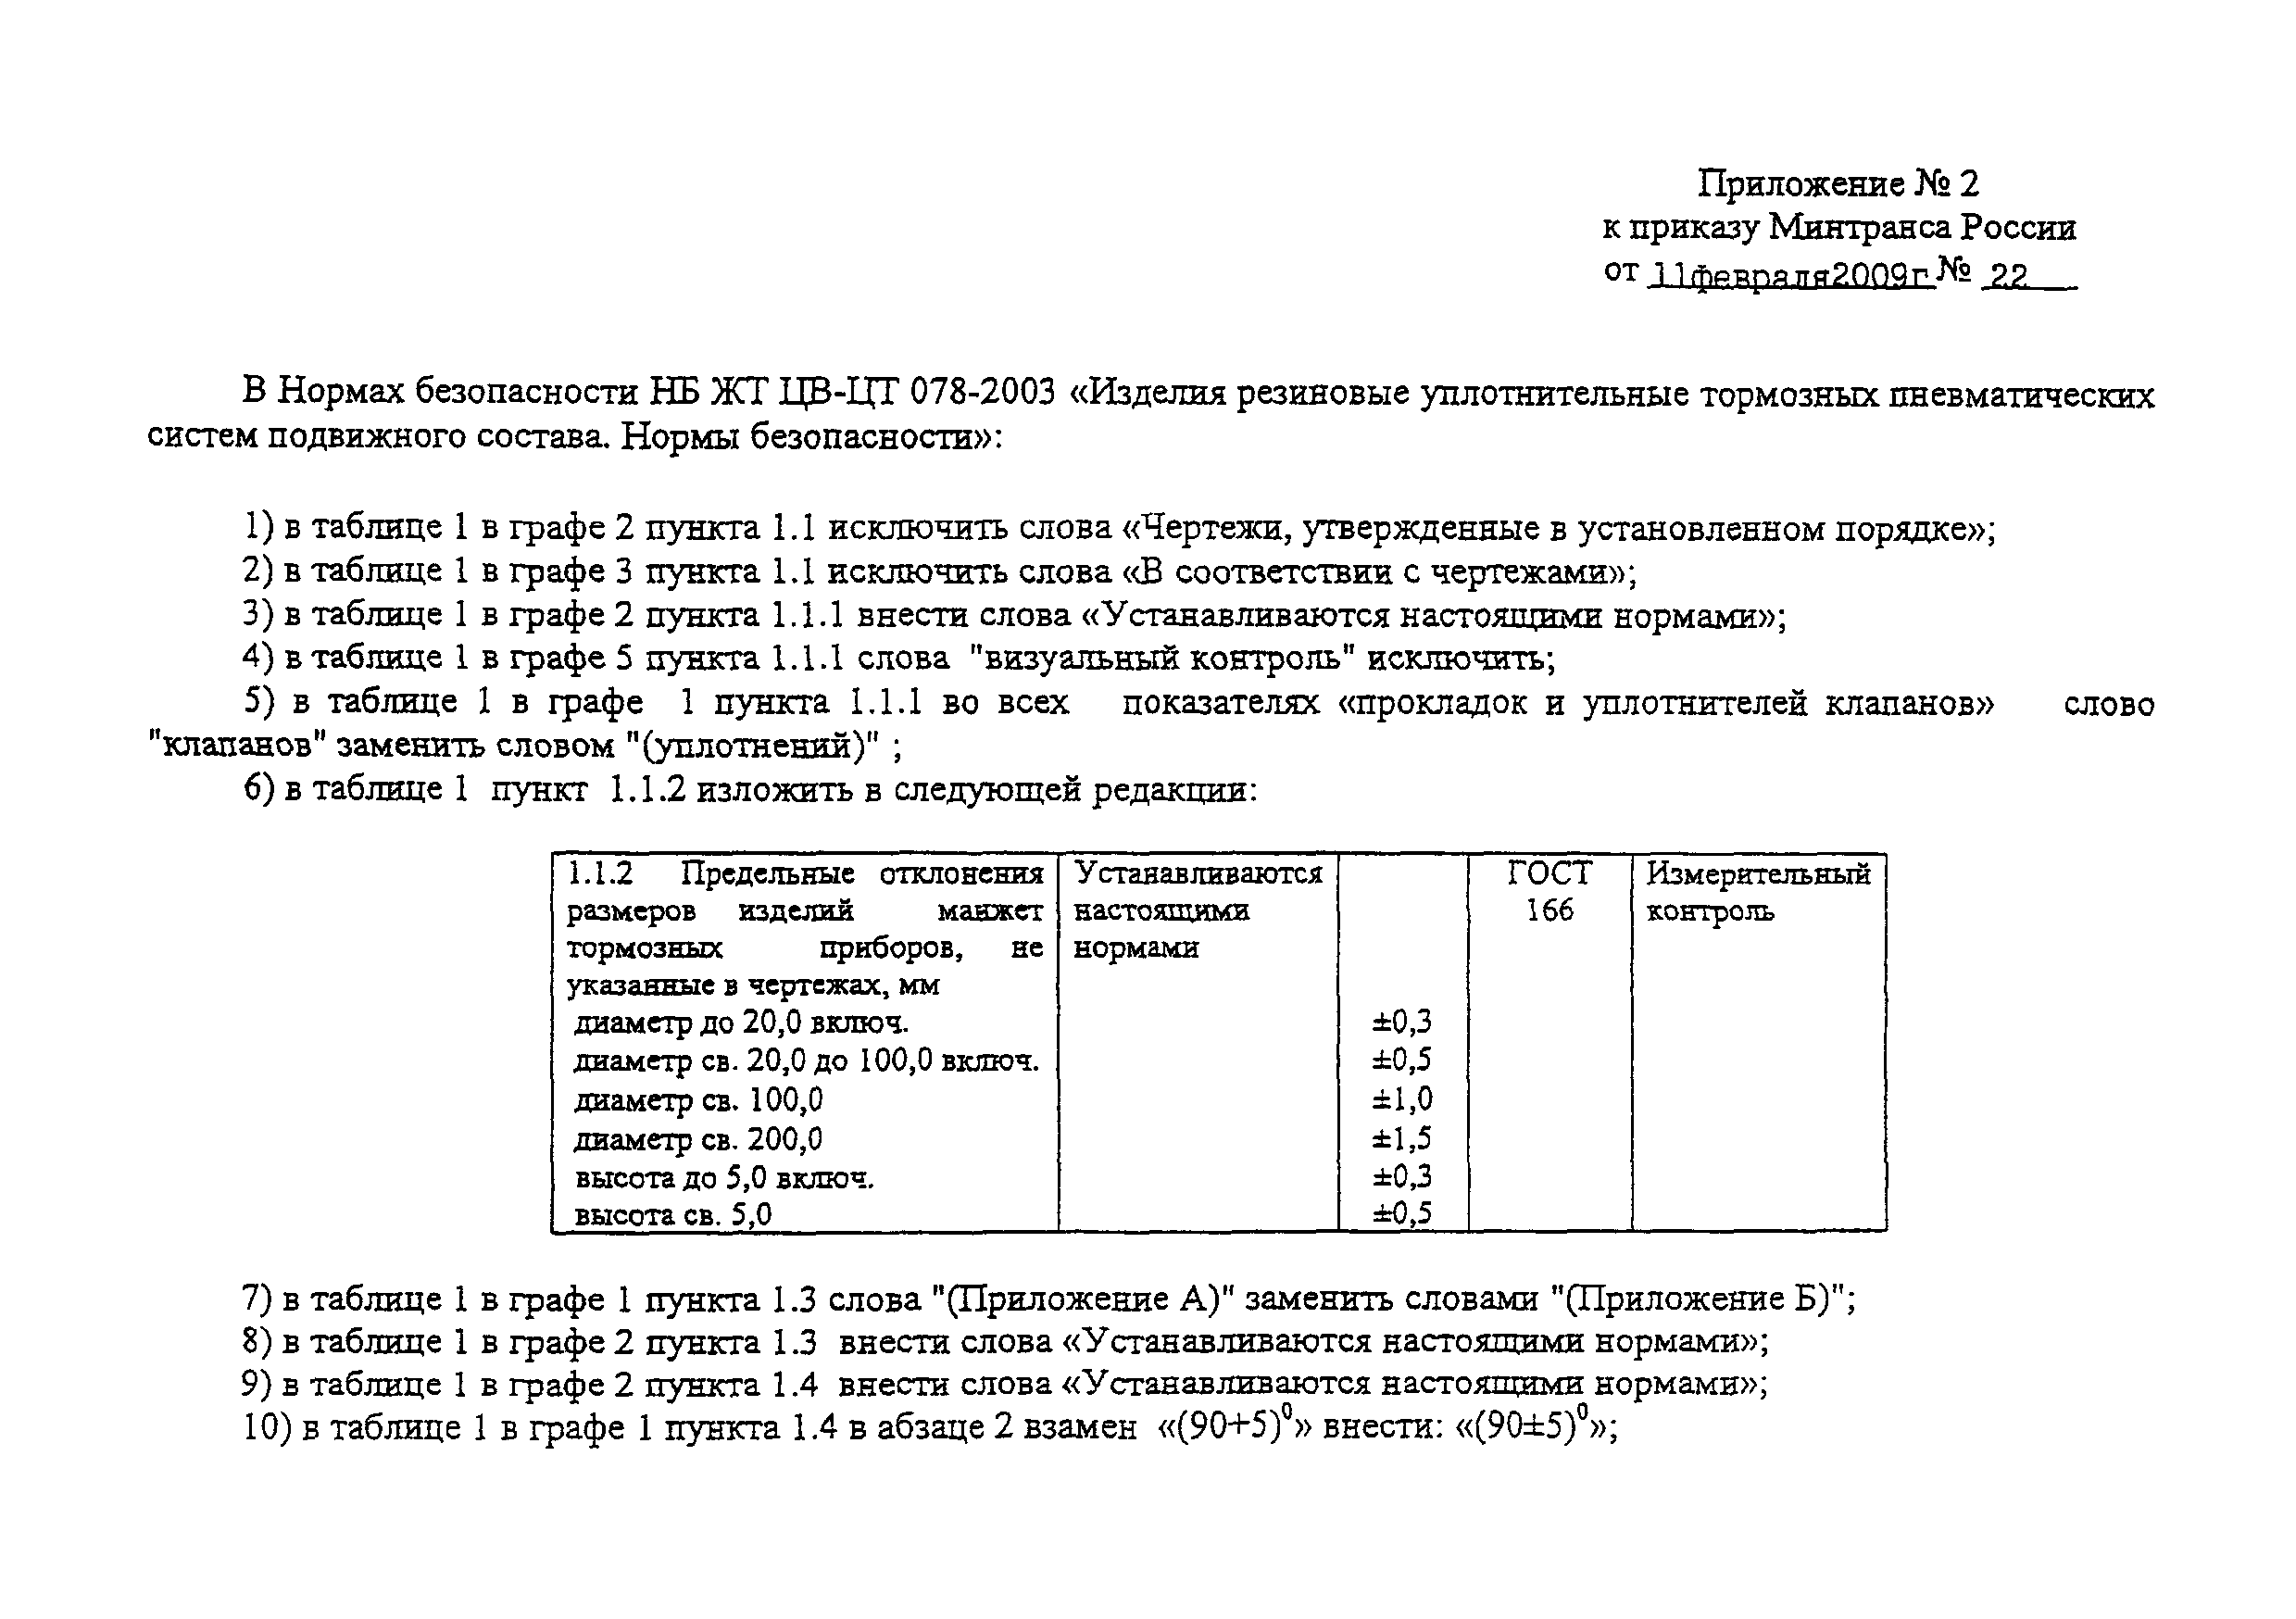 НБ ЖТ ЦВ-ЦТ 078-2003